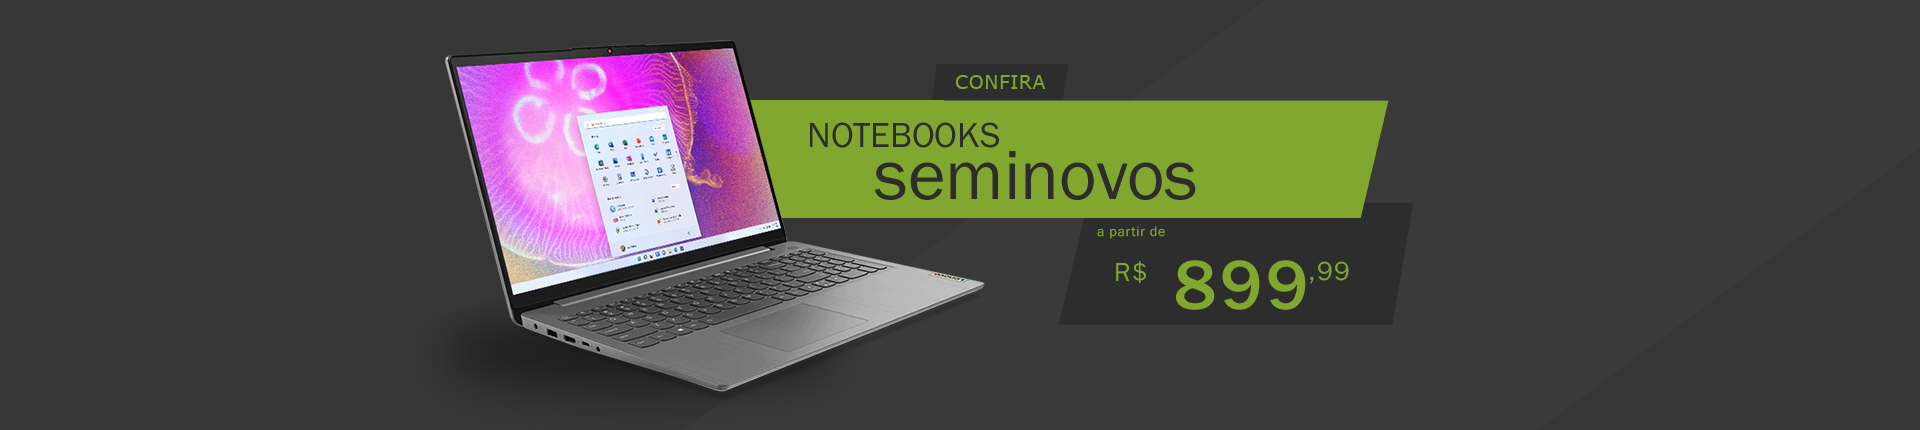 Notebooks Seminovos